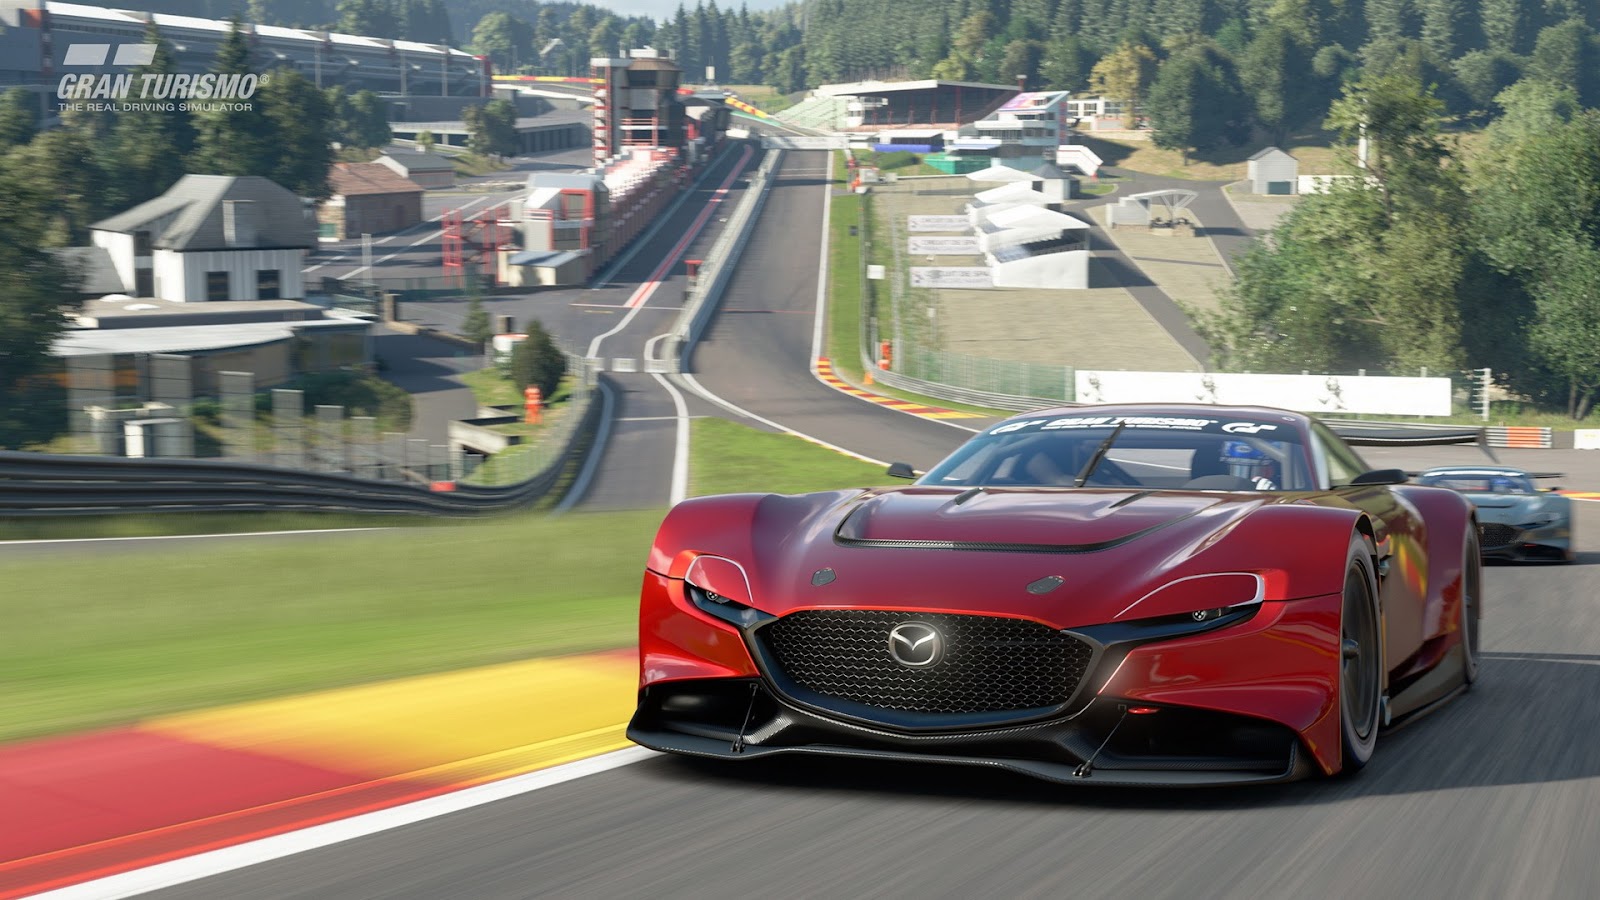 Screenshot from a race in Gran Turismo 7